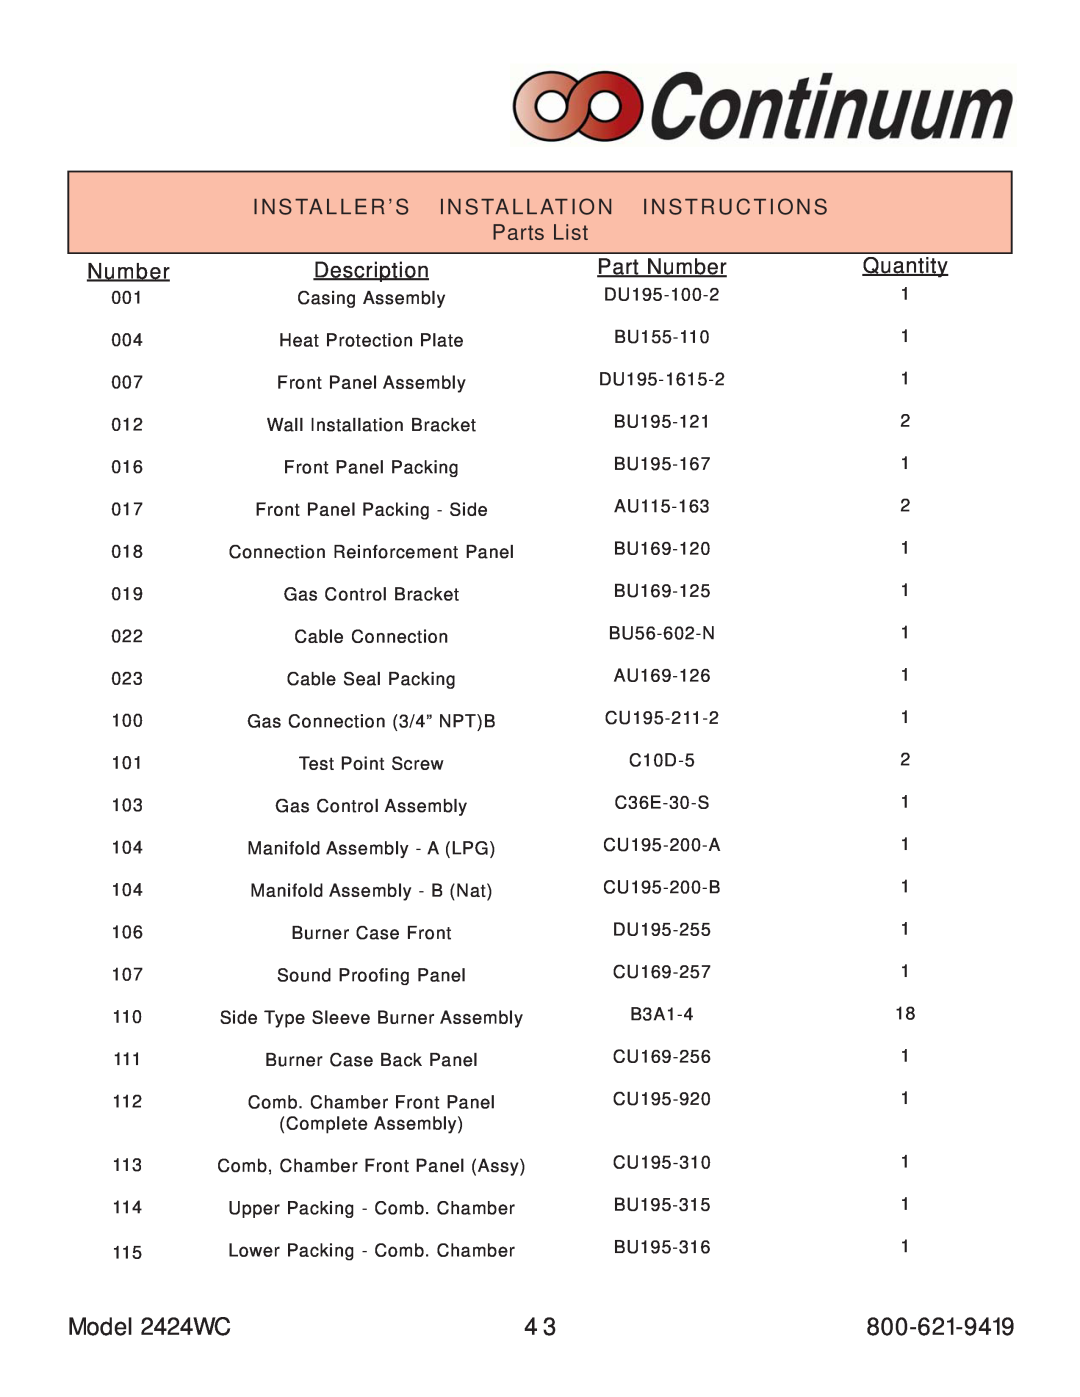 Rinnai manual Model 2424WC, INSTALLER’S INSTALLATION INSTRUCTIONS Parts List, Description, Part Number, Quantity 